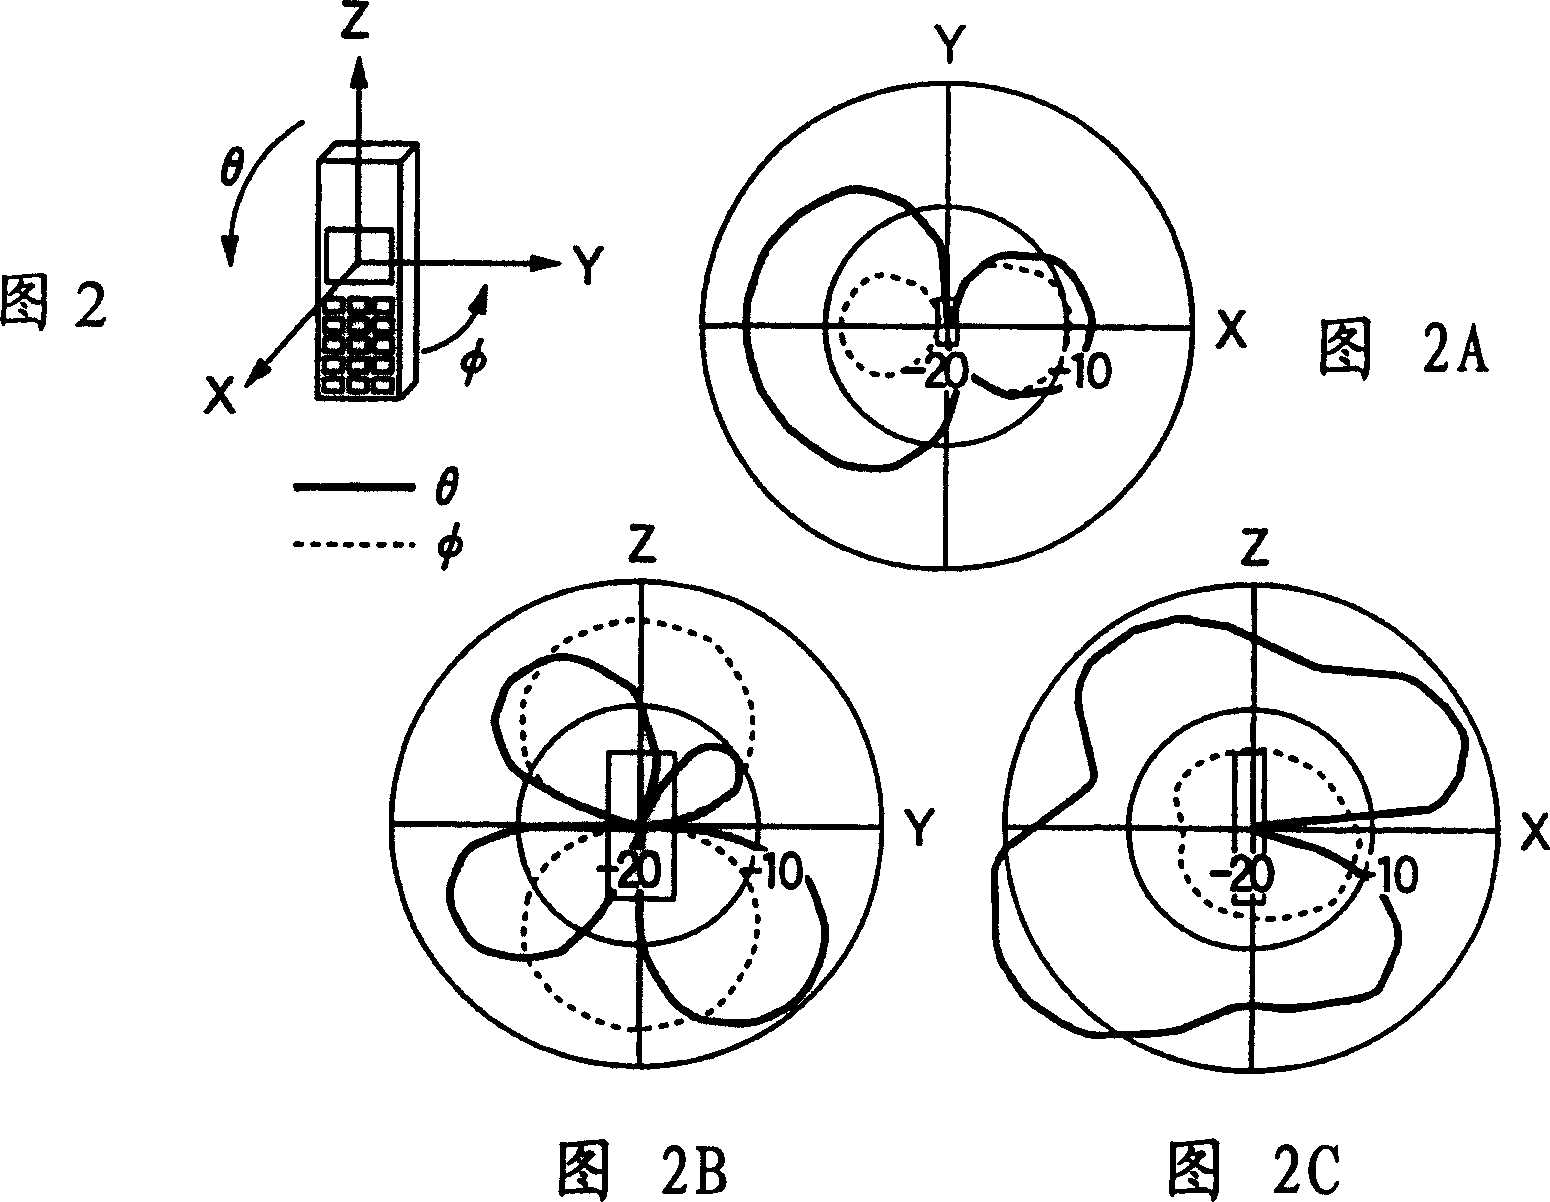 Antenna element